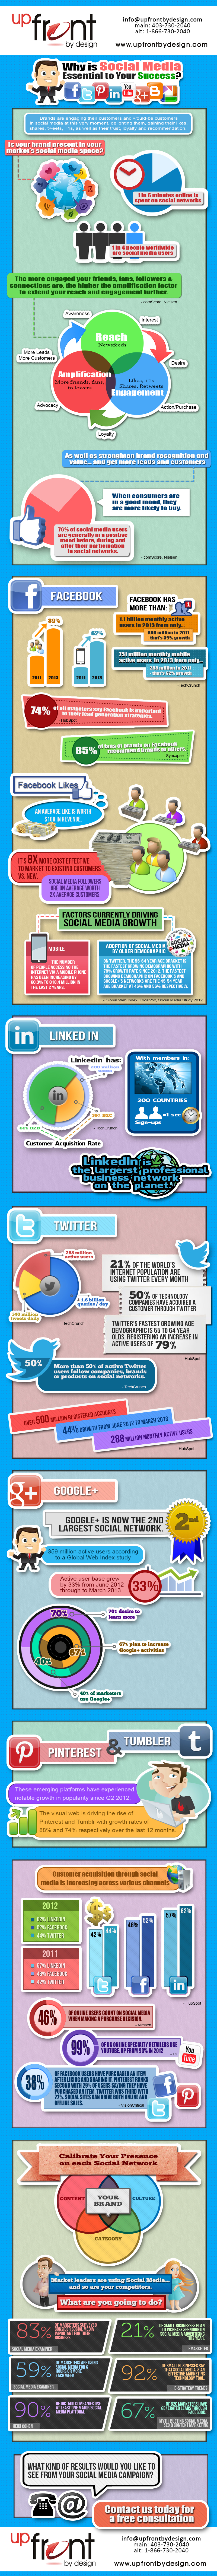 UpFrontByDesign.com-Social-Media-Optimization-Infographic-2013